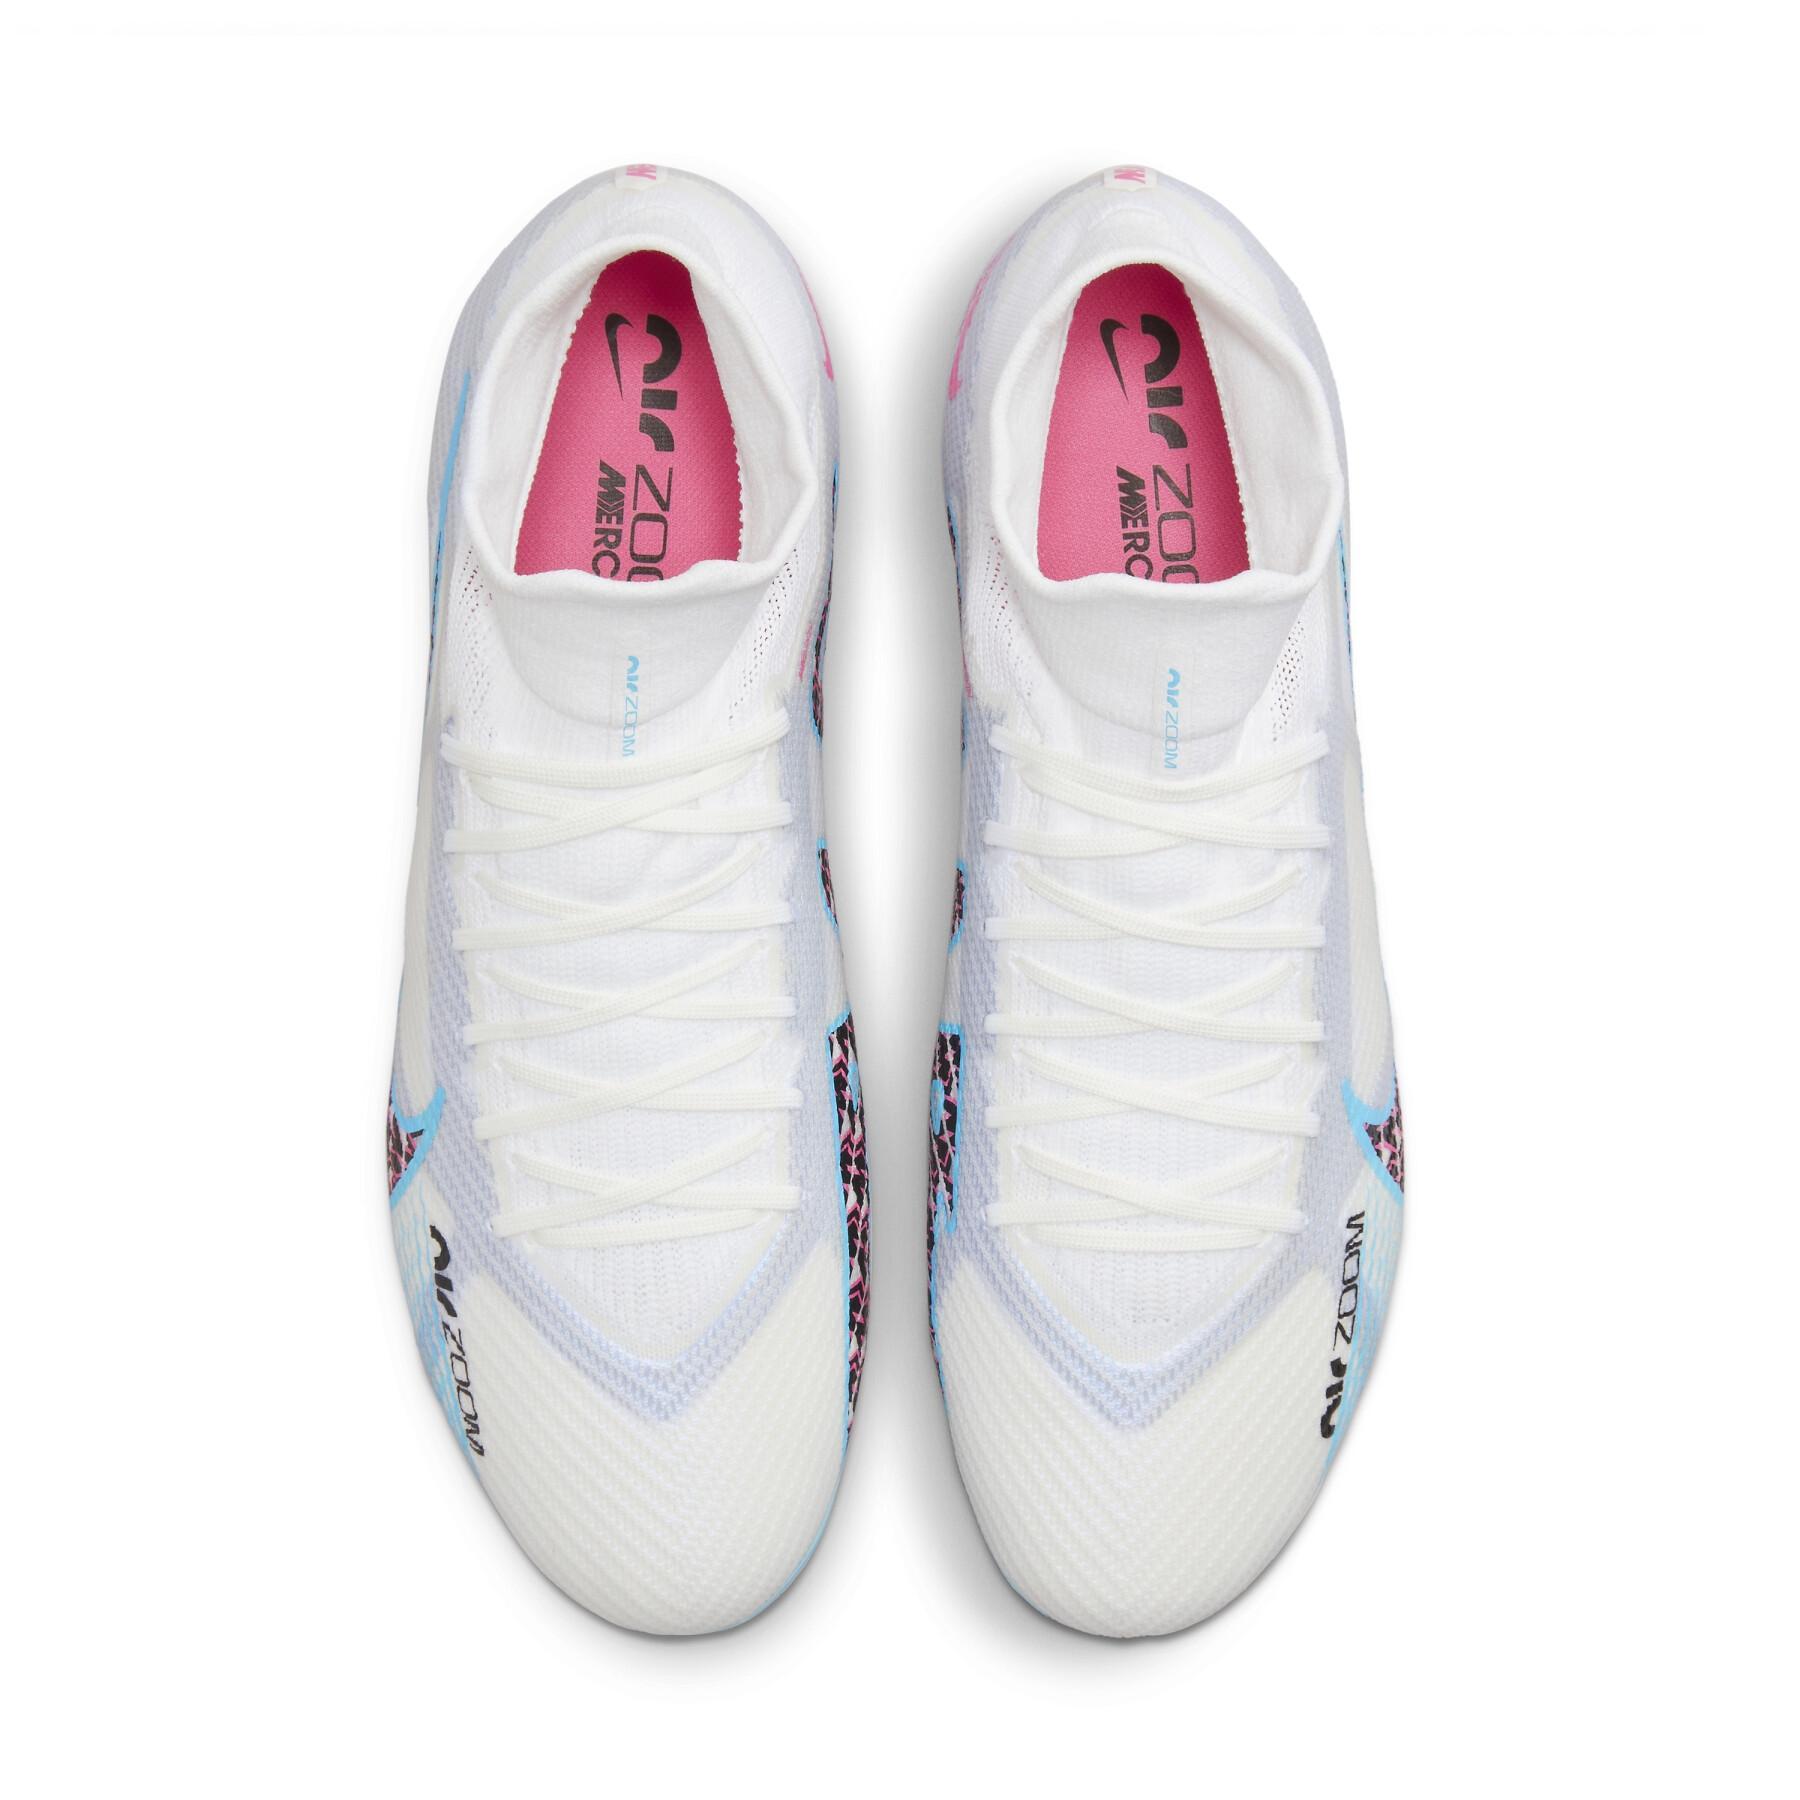 Chaussures de football Nike Zoom Mercurial Superfly 9 Pro FG - Blast Pack